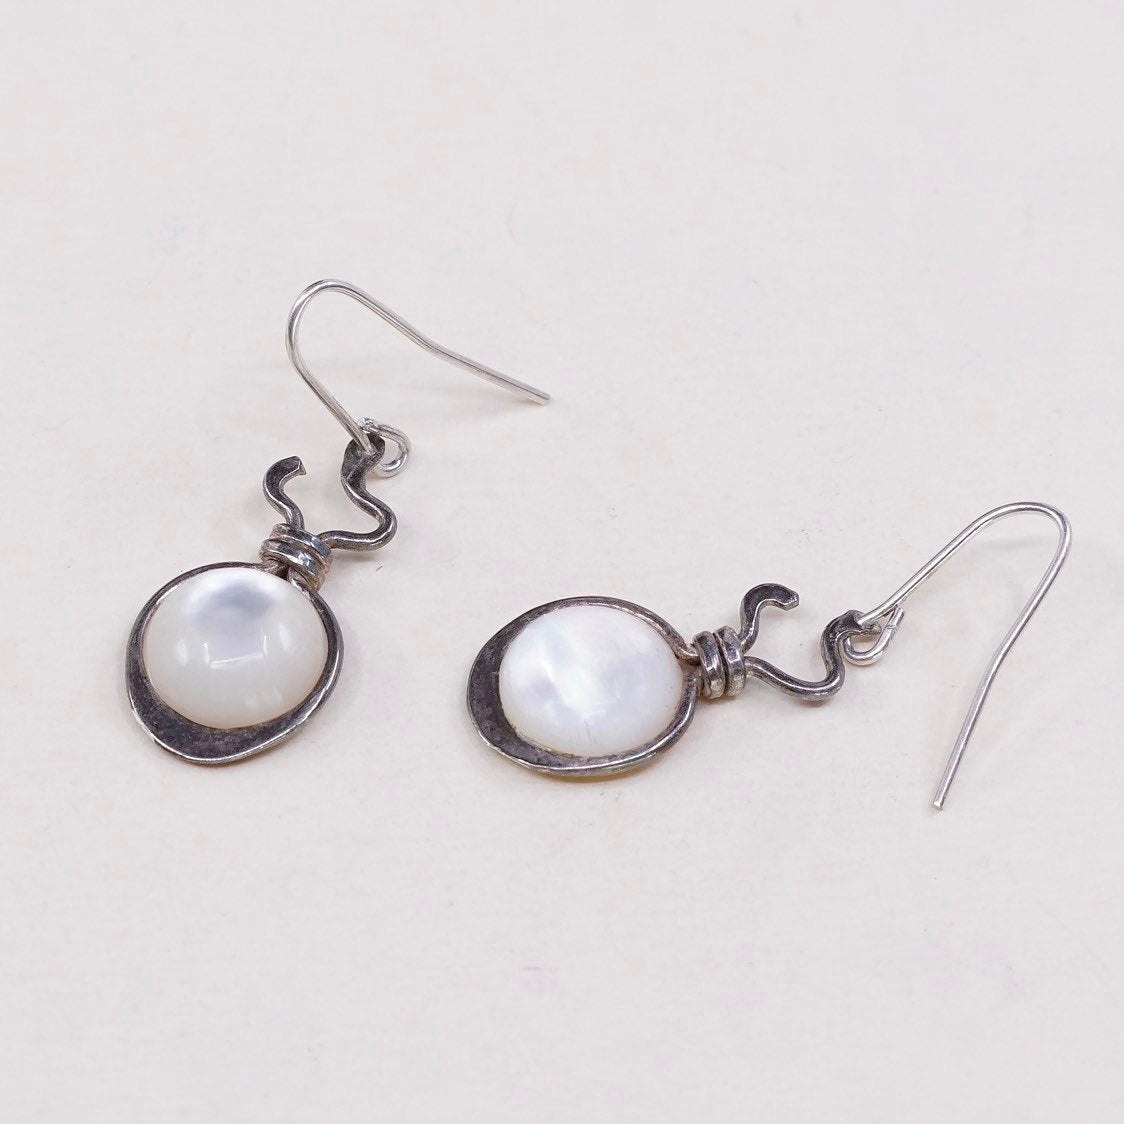 vtg sterling silver handmade earrings, mother of pearl round drops w/ 925 hooks